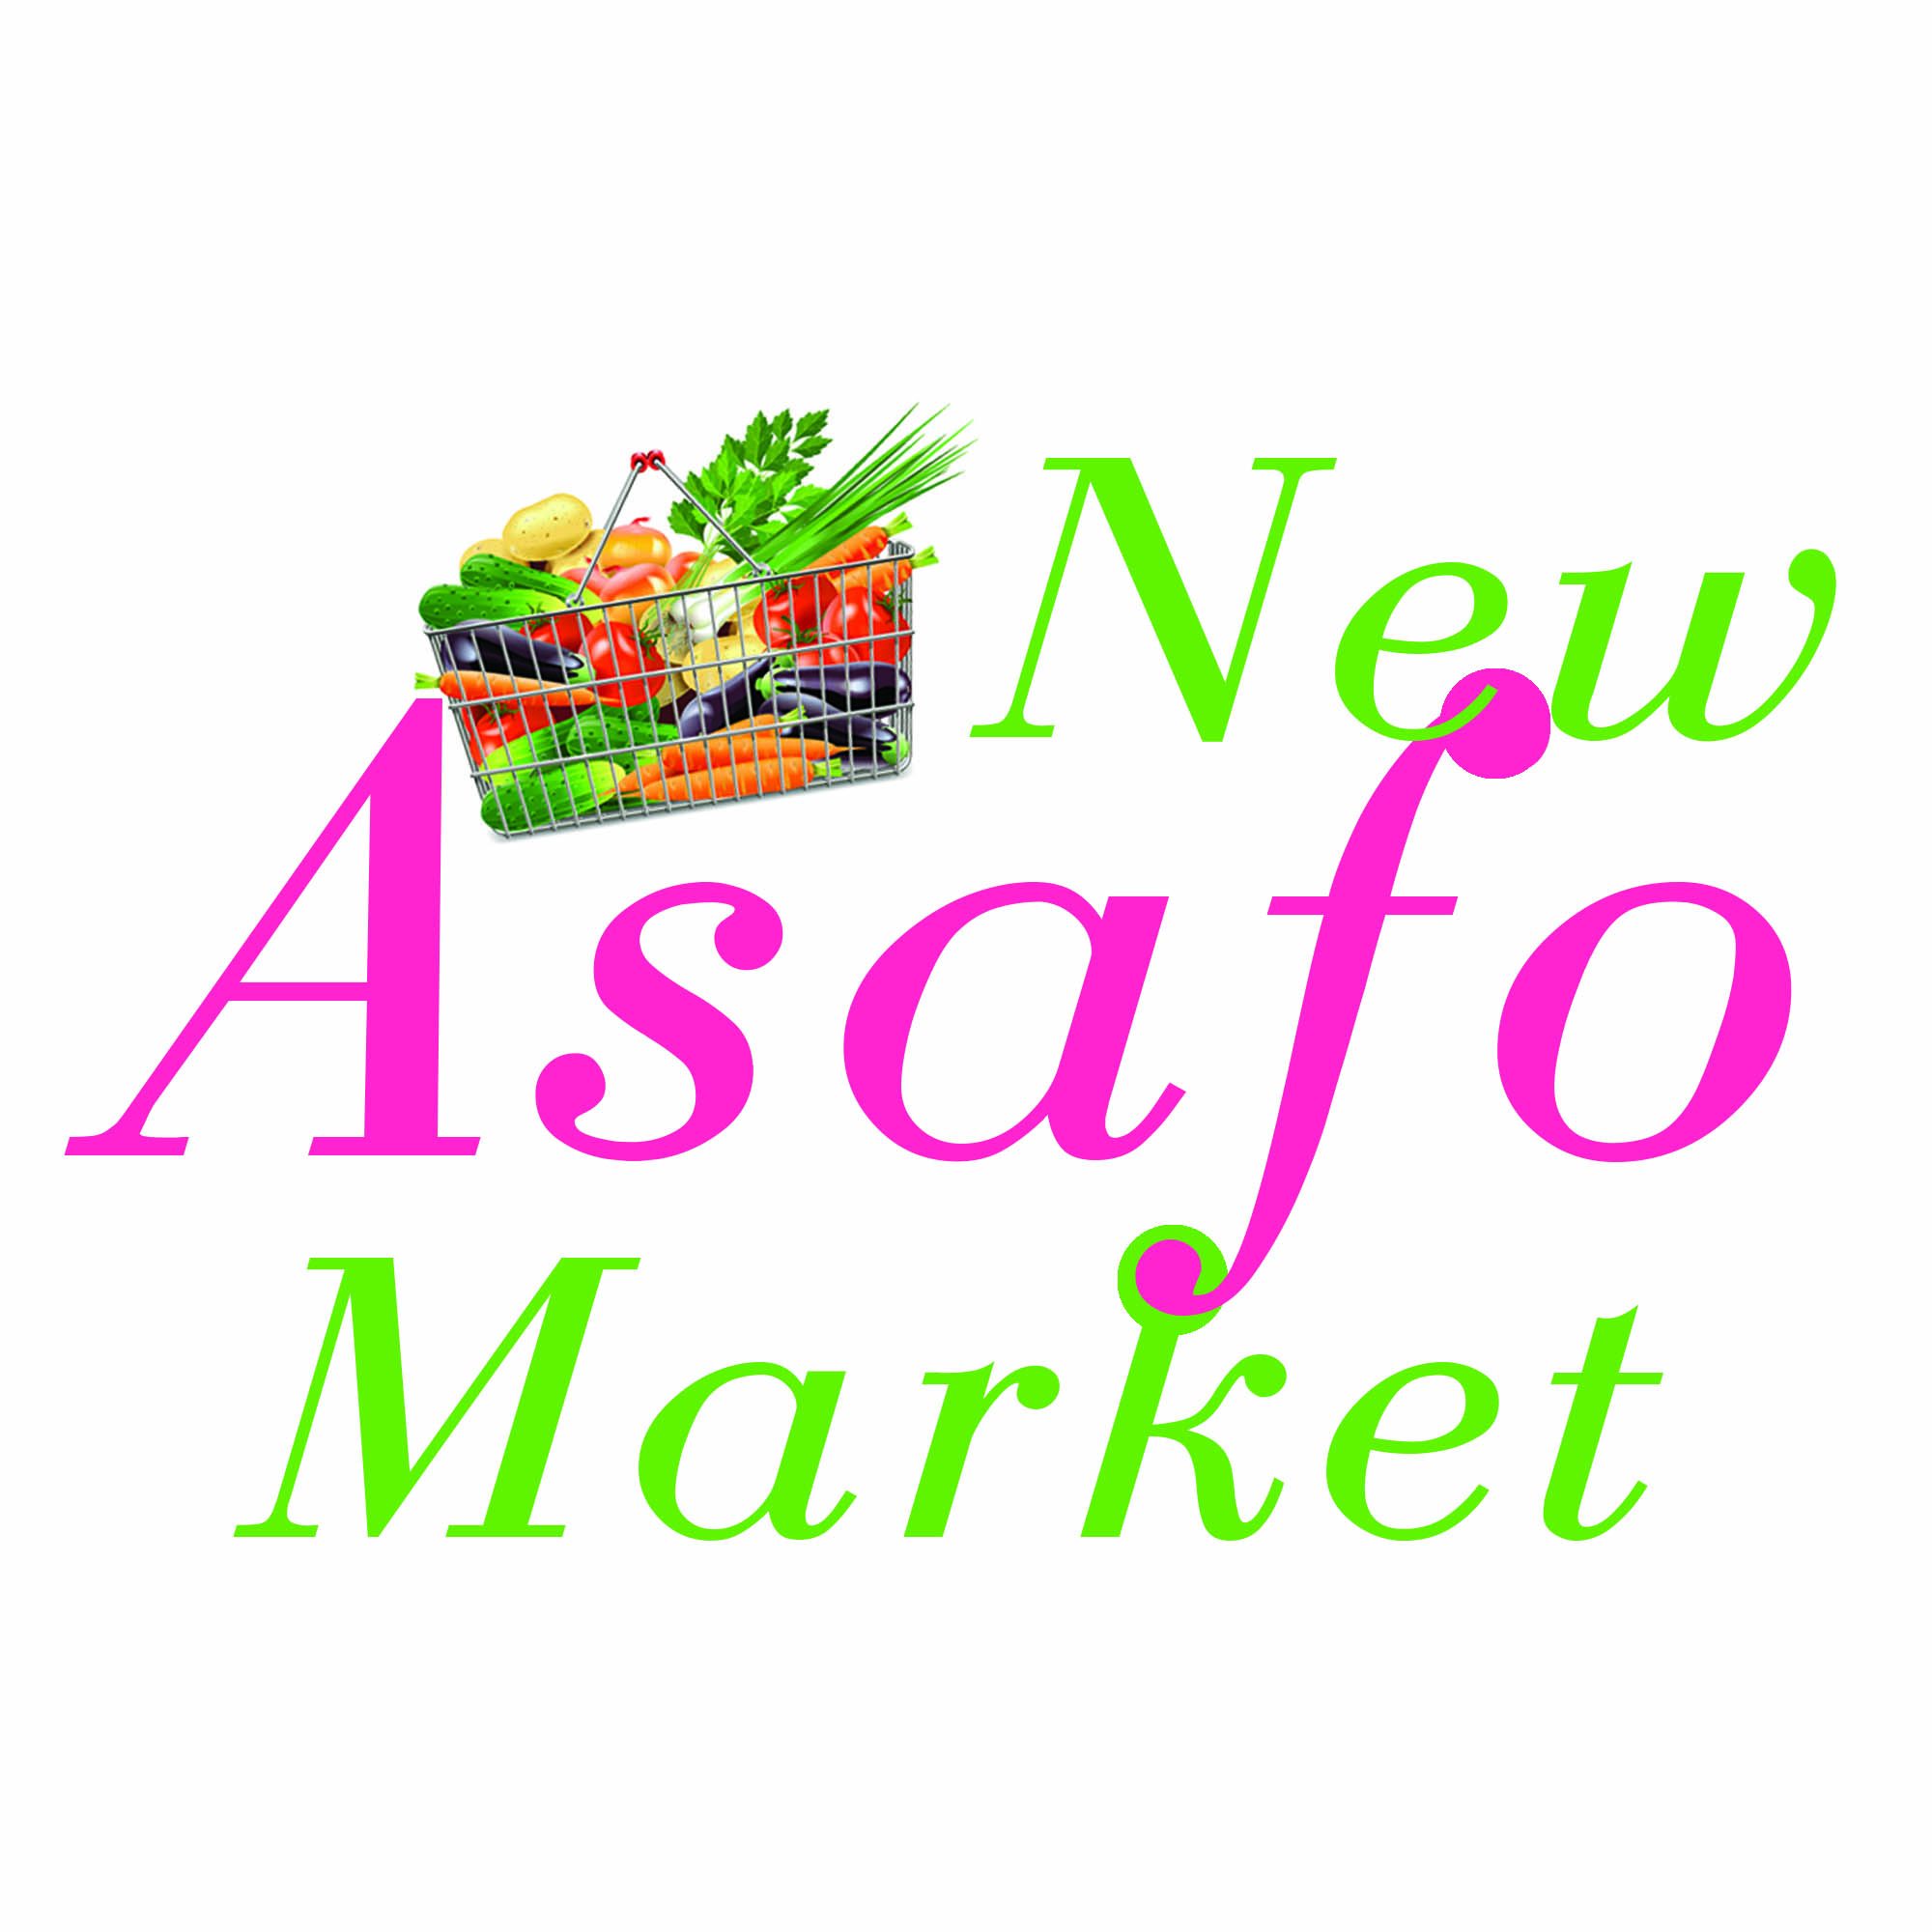 Asafo Market Express